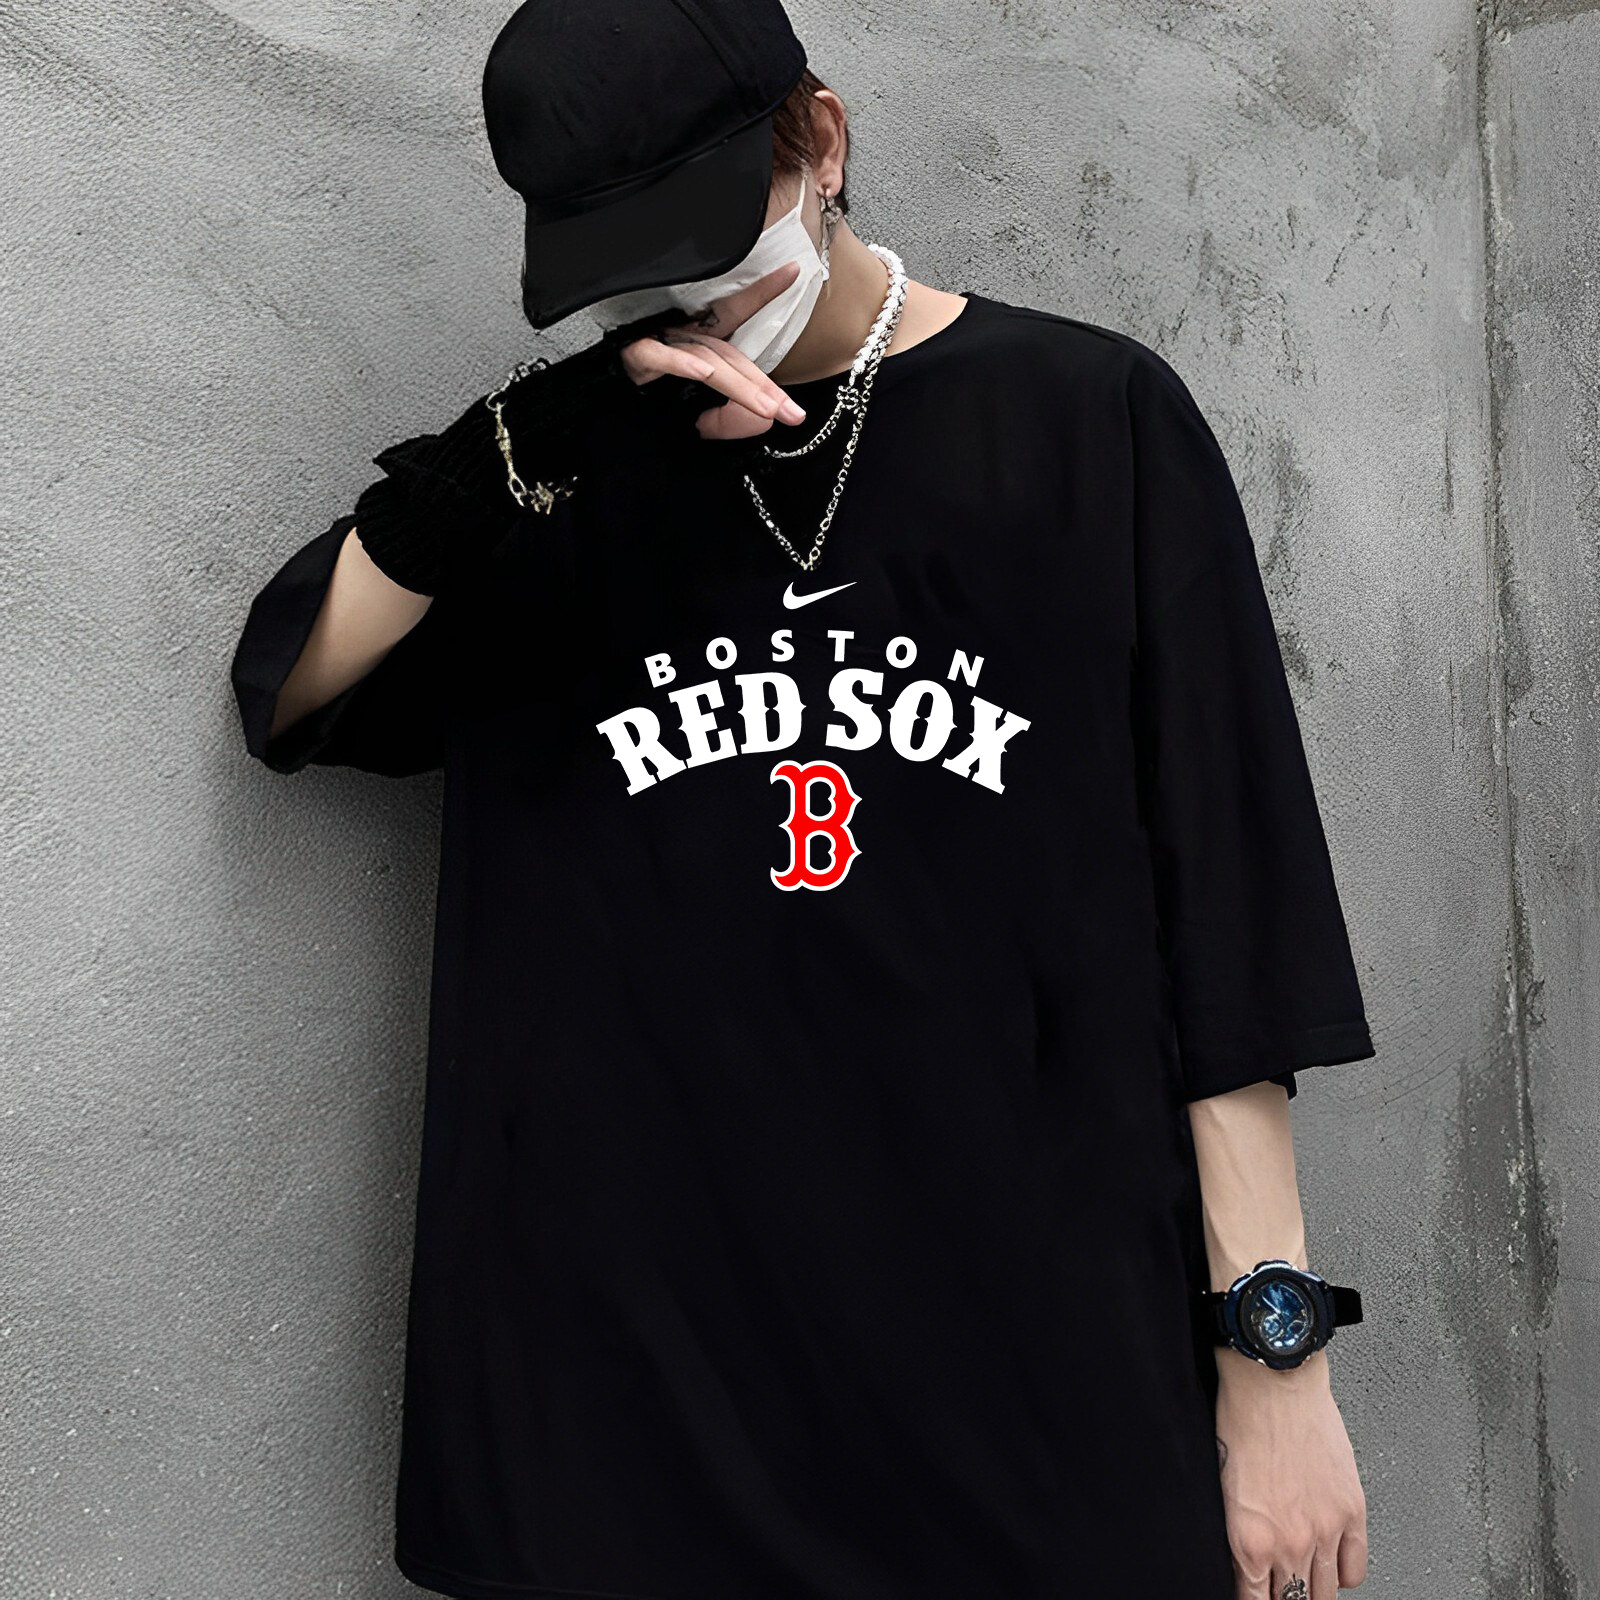 Boston Red Sox Shirt ราคาถูก ซื้อออนไลน์ที่ - พ.ย. 2023 | Lazada.co.th